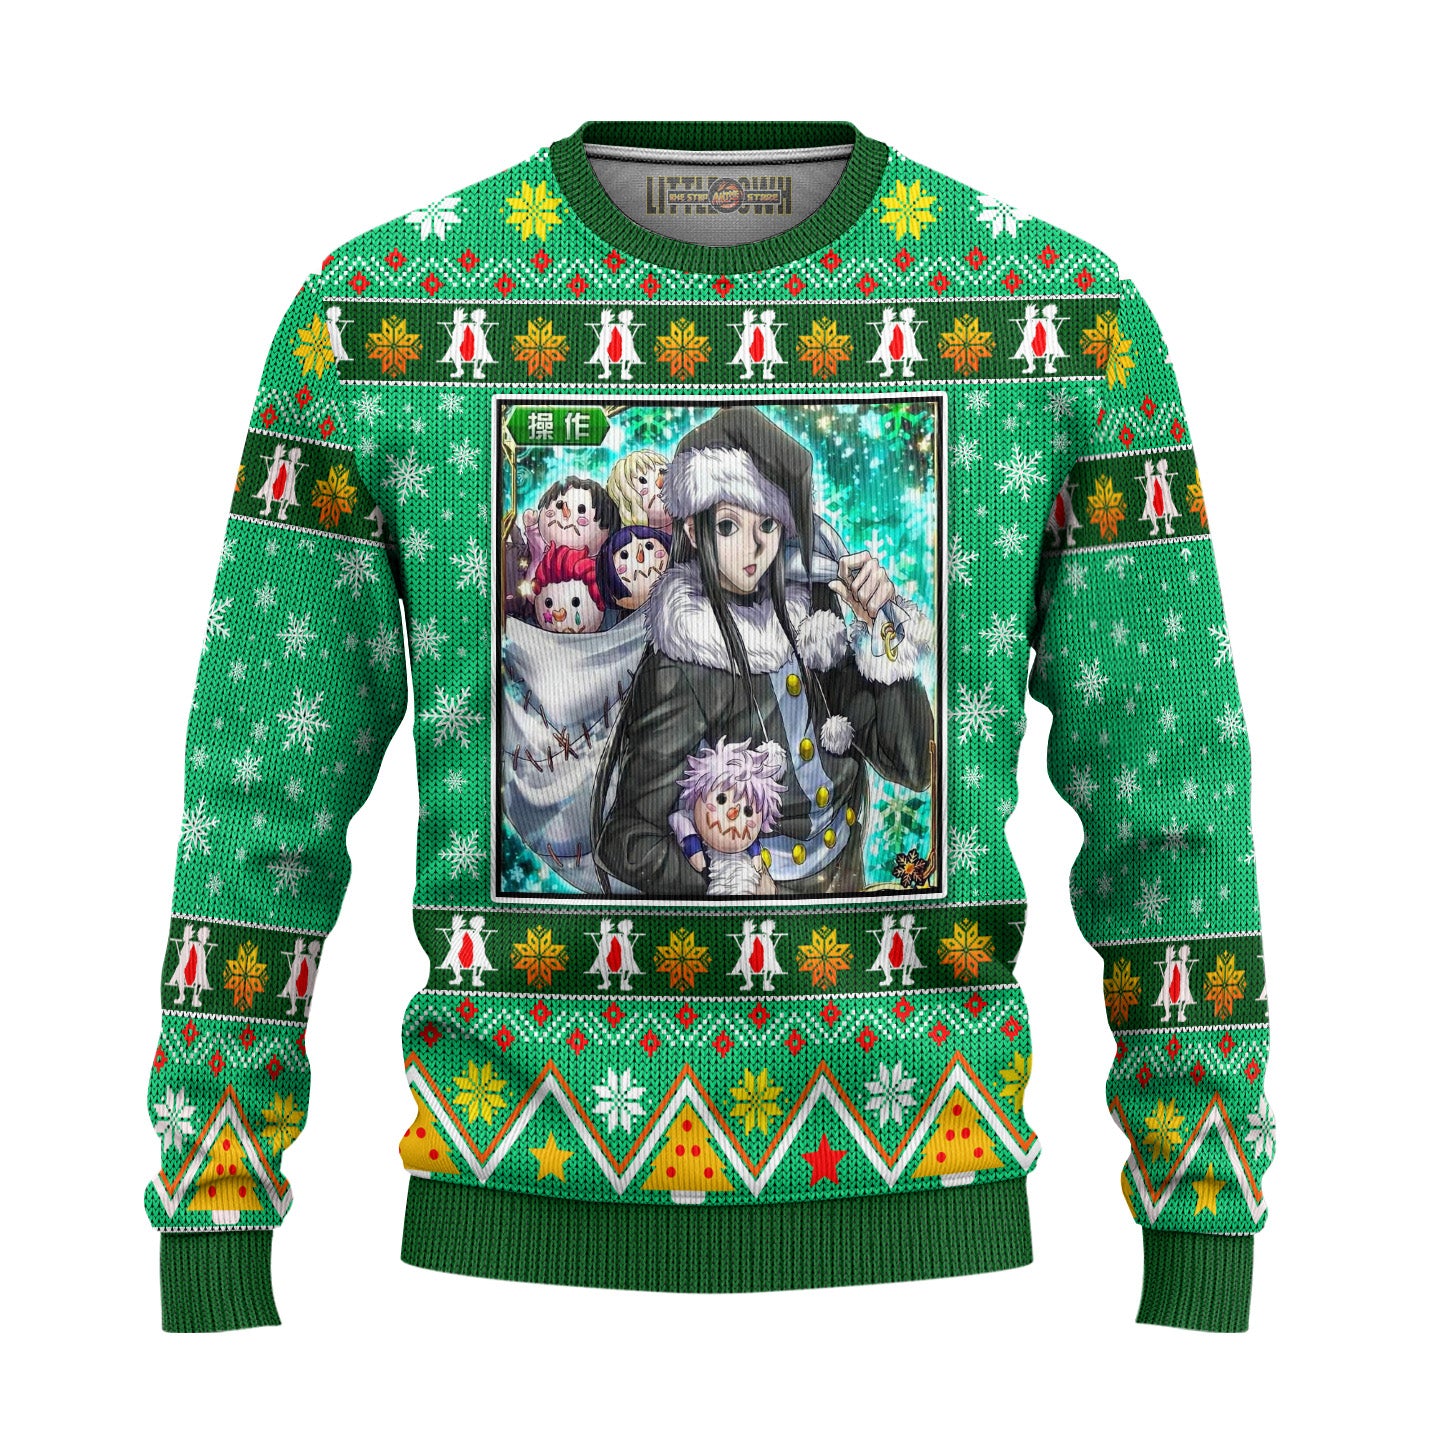 Leorio Paradinight Anime Ugly Christmas Sweater Hunter x Hunter New Design